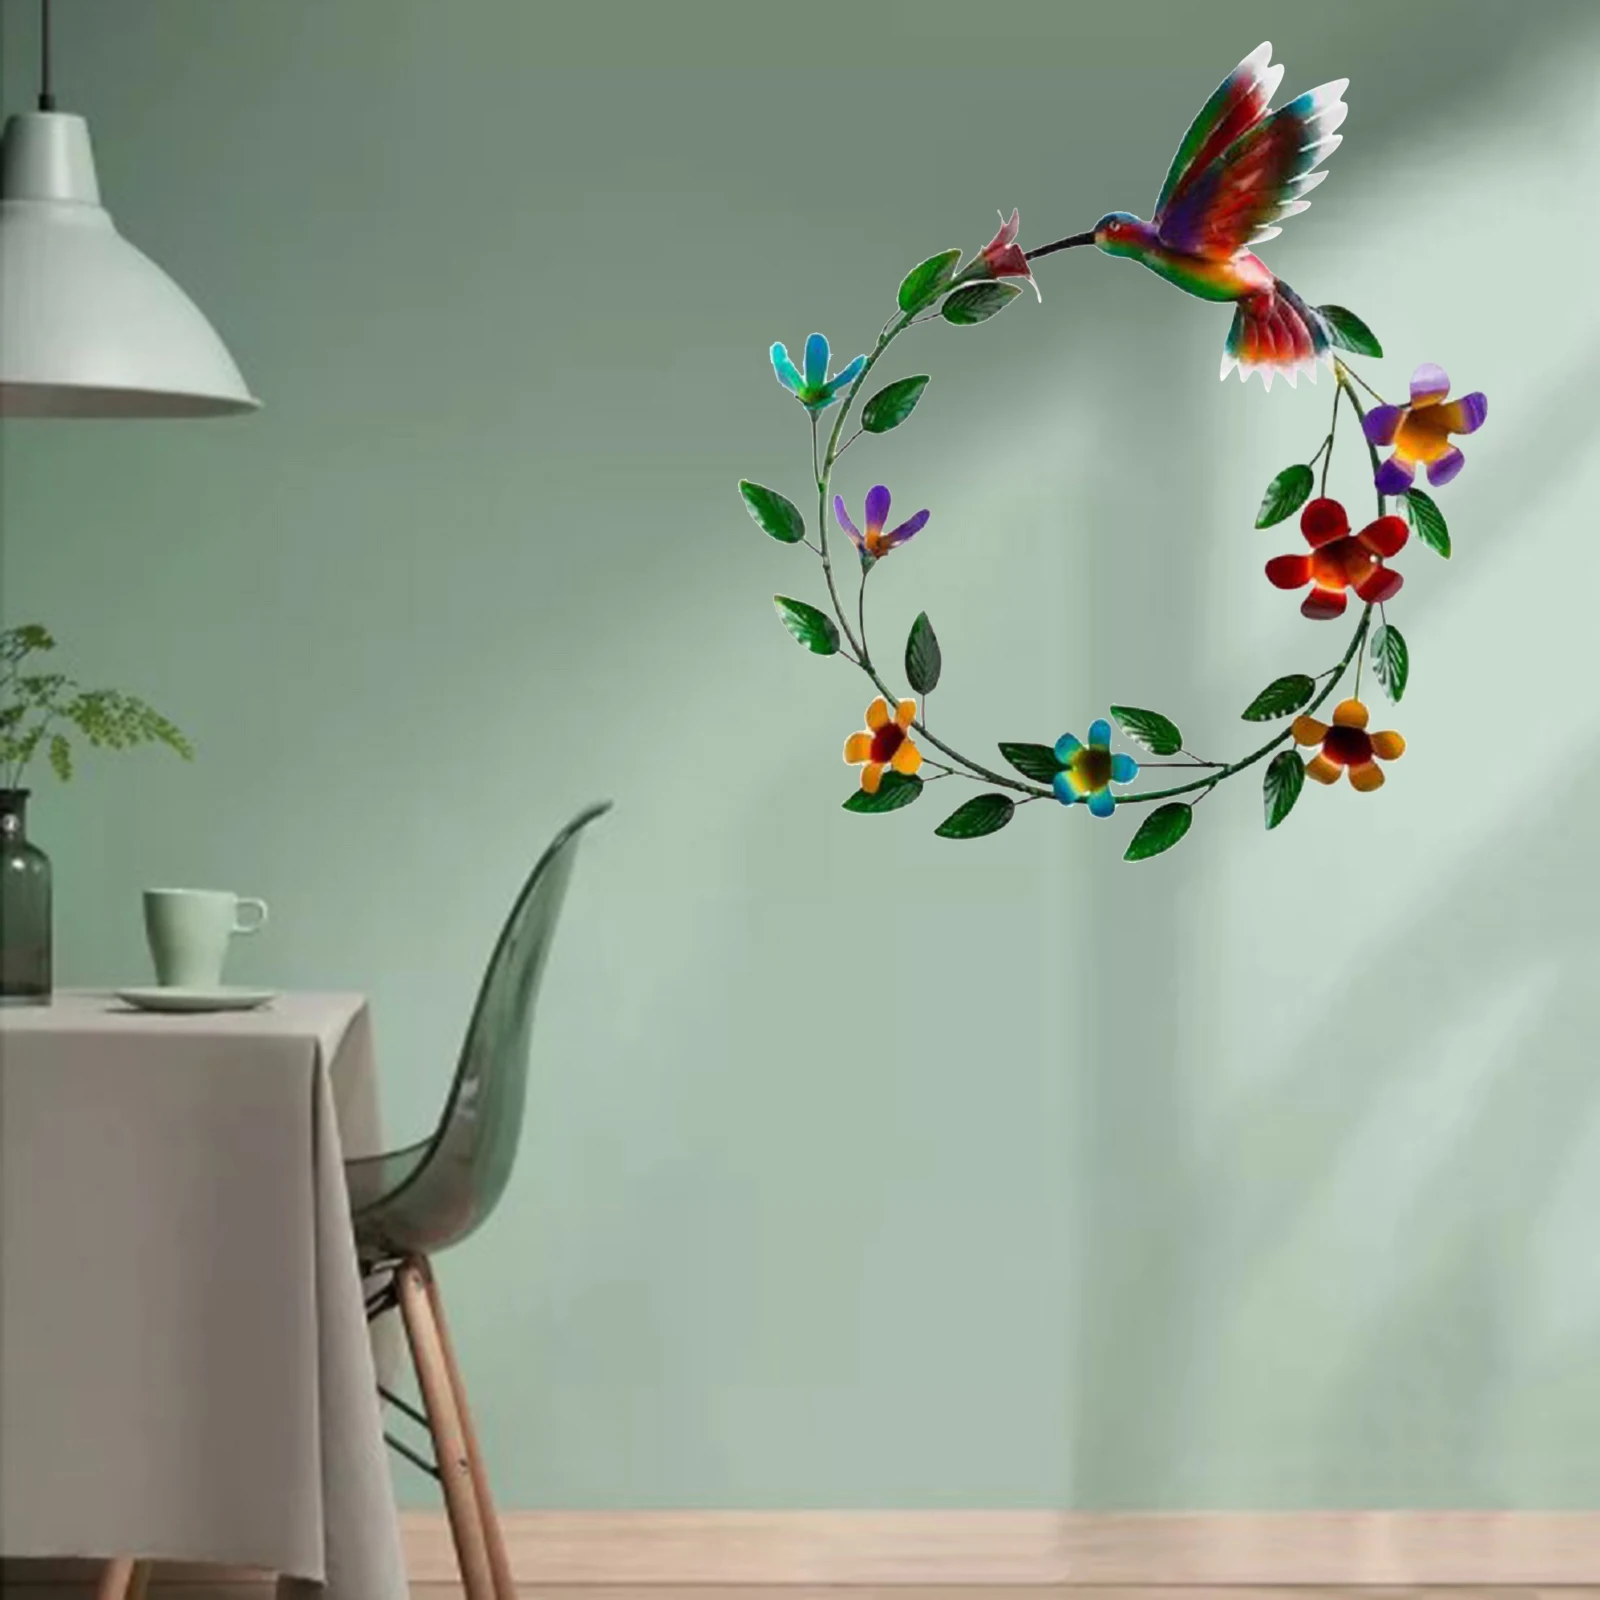 Hummingbird Art Wreath Decor Wall ing Outdoor Wedding Decoration Pendant